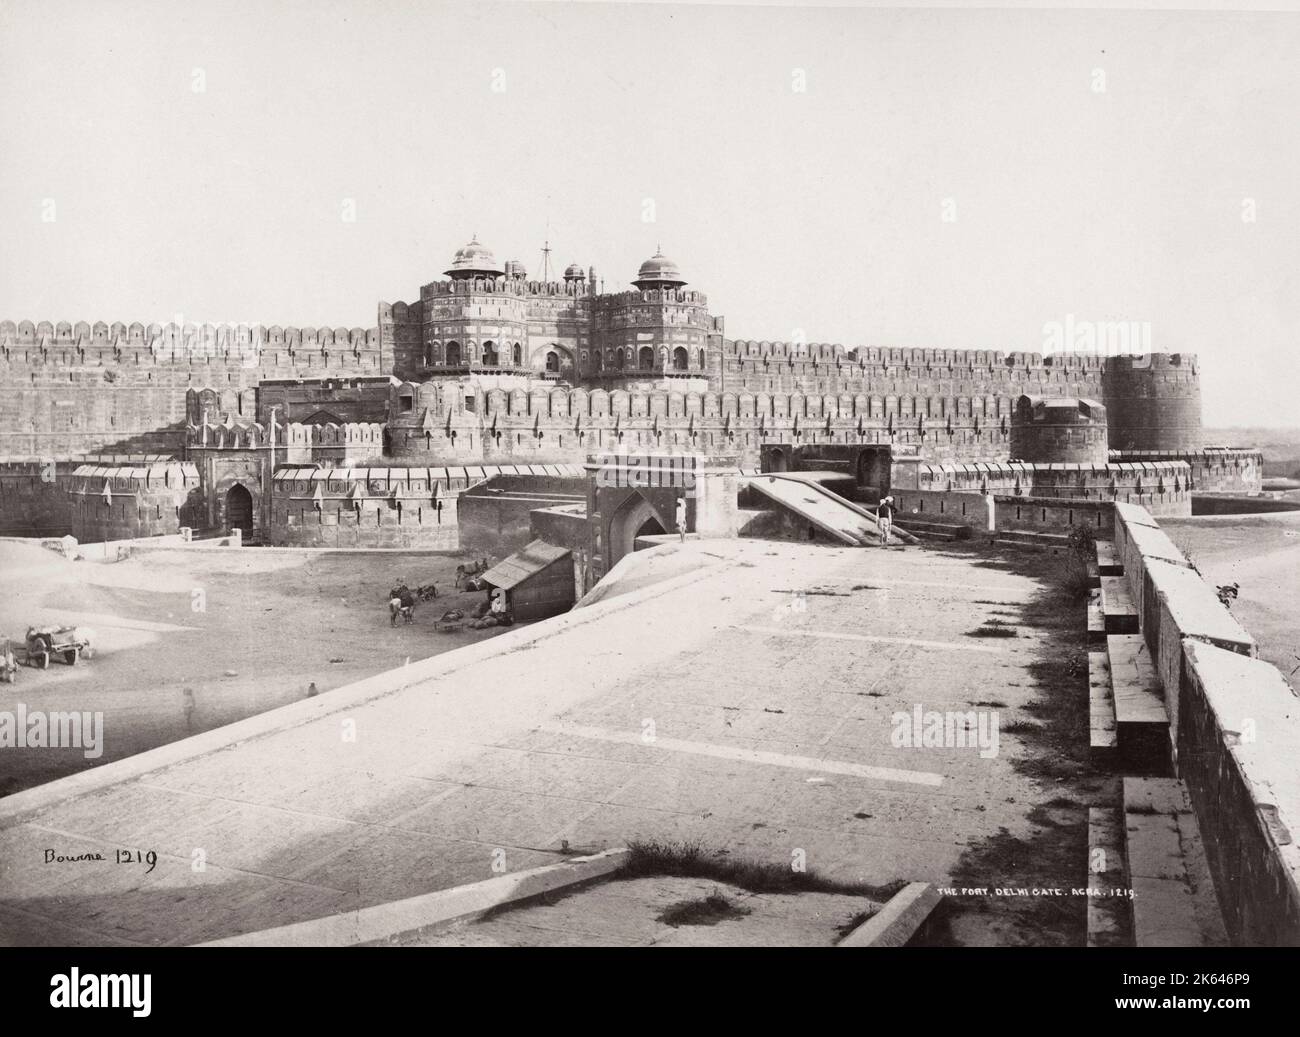 c.1900 vintage photograph: Agra, the Fort, Delhi Gate, Samuel Bourne photograph. Stock Photo